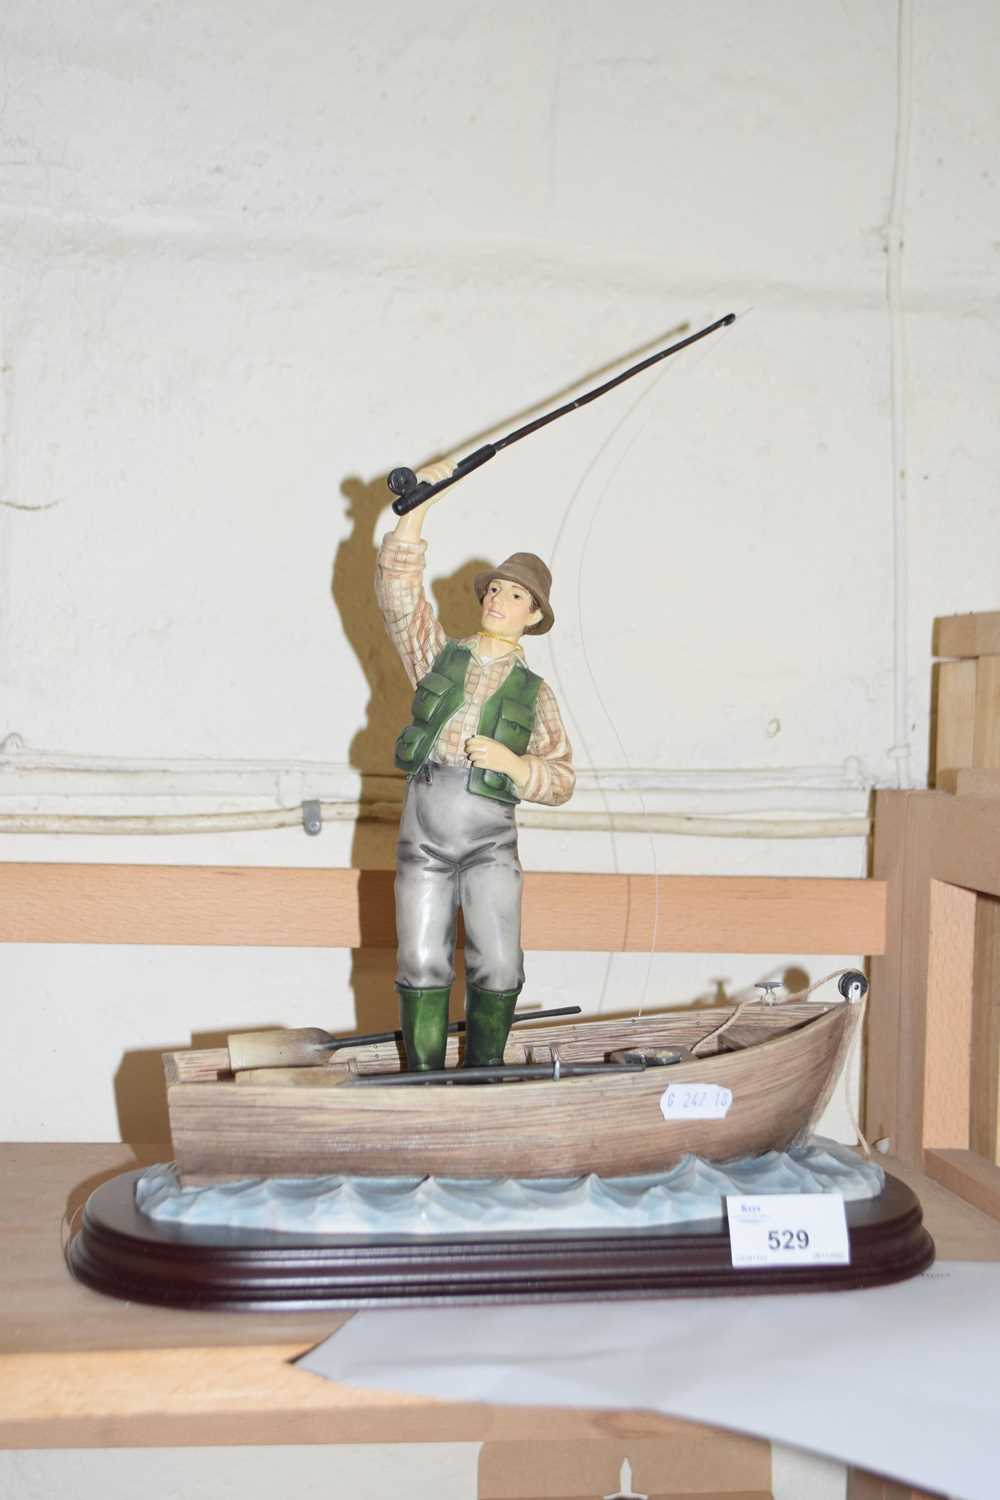 Leonardo model of a fisherman without box